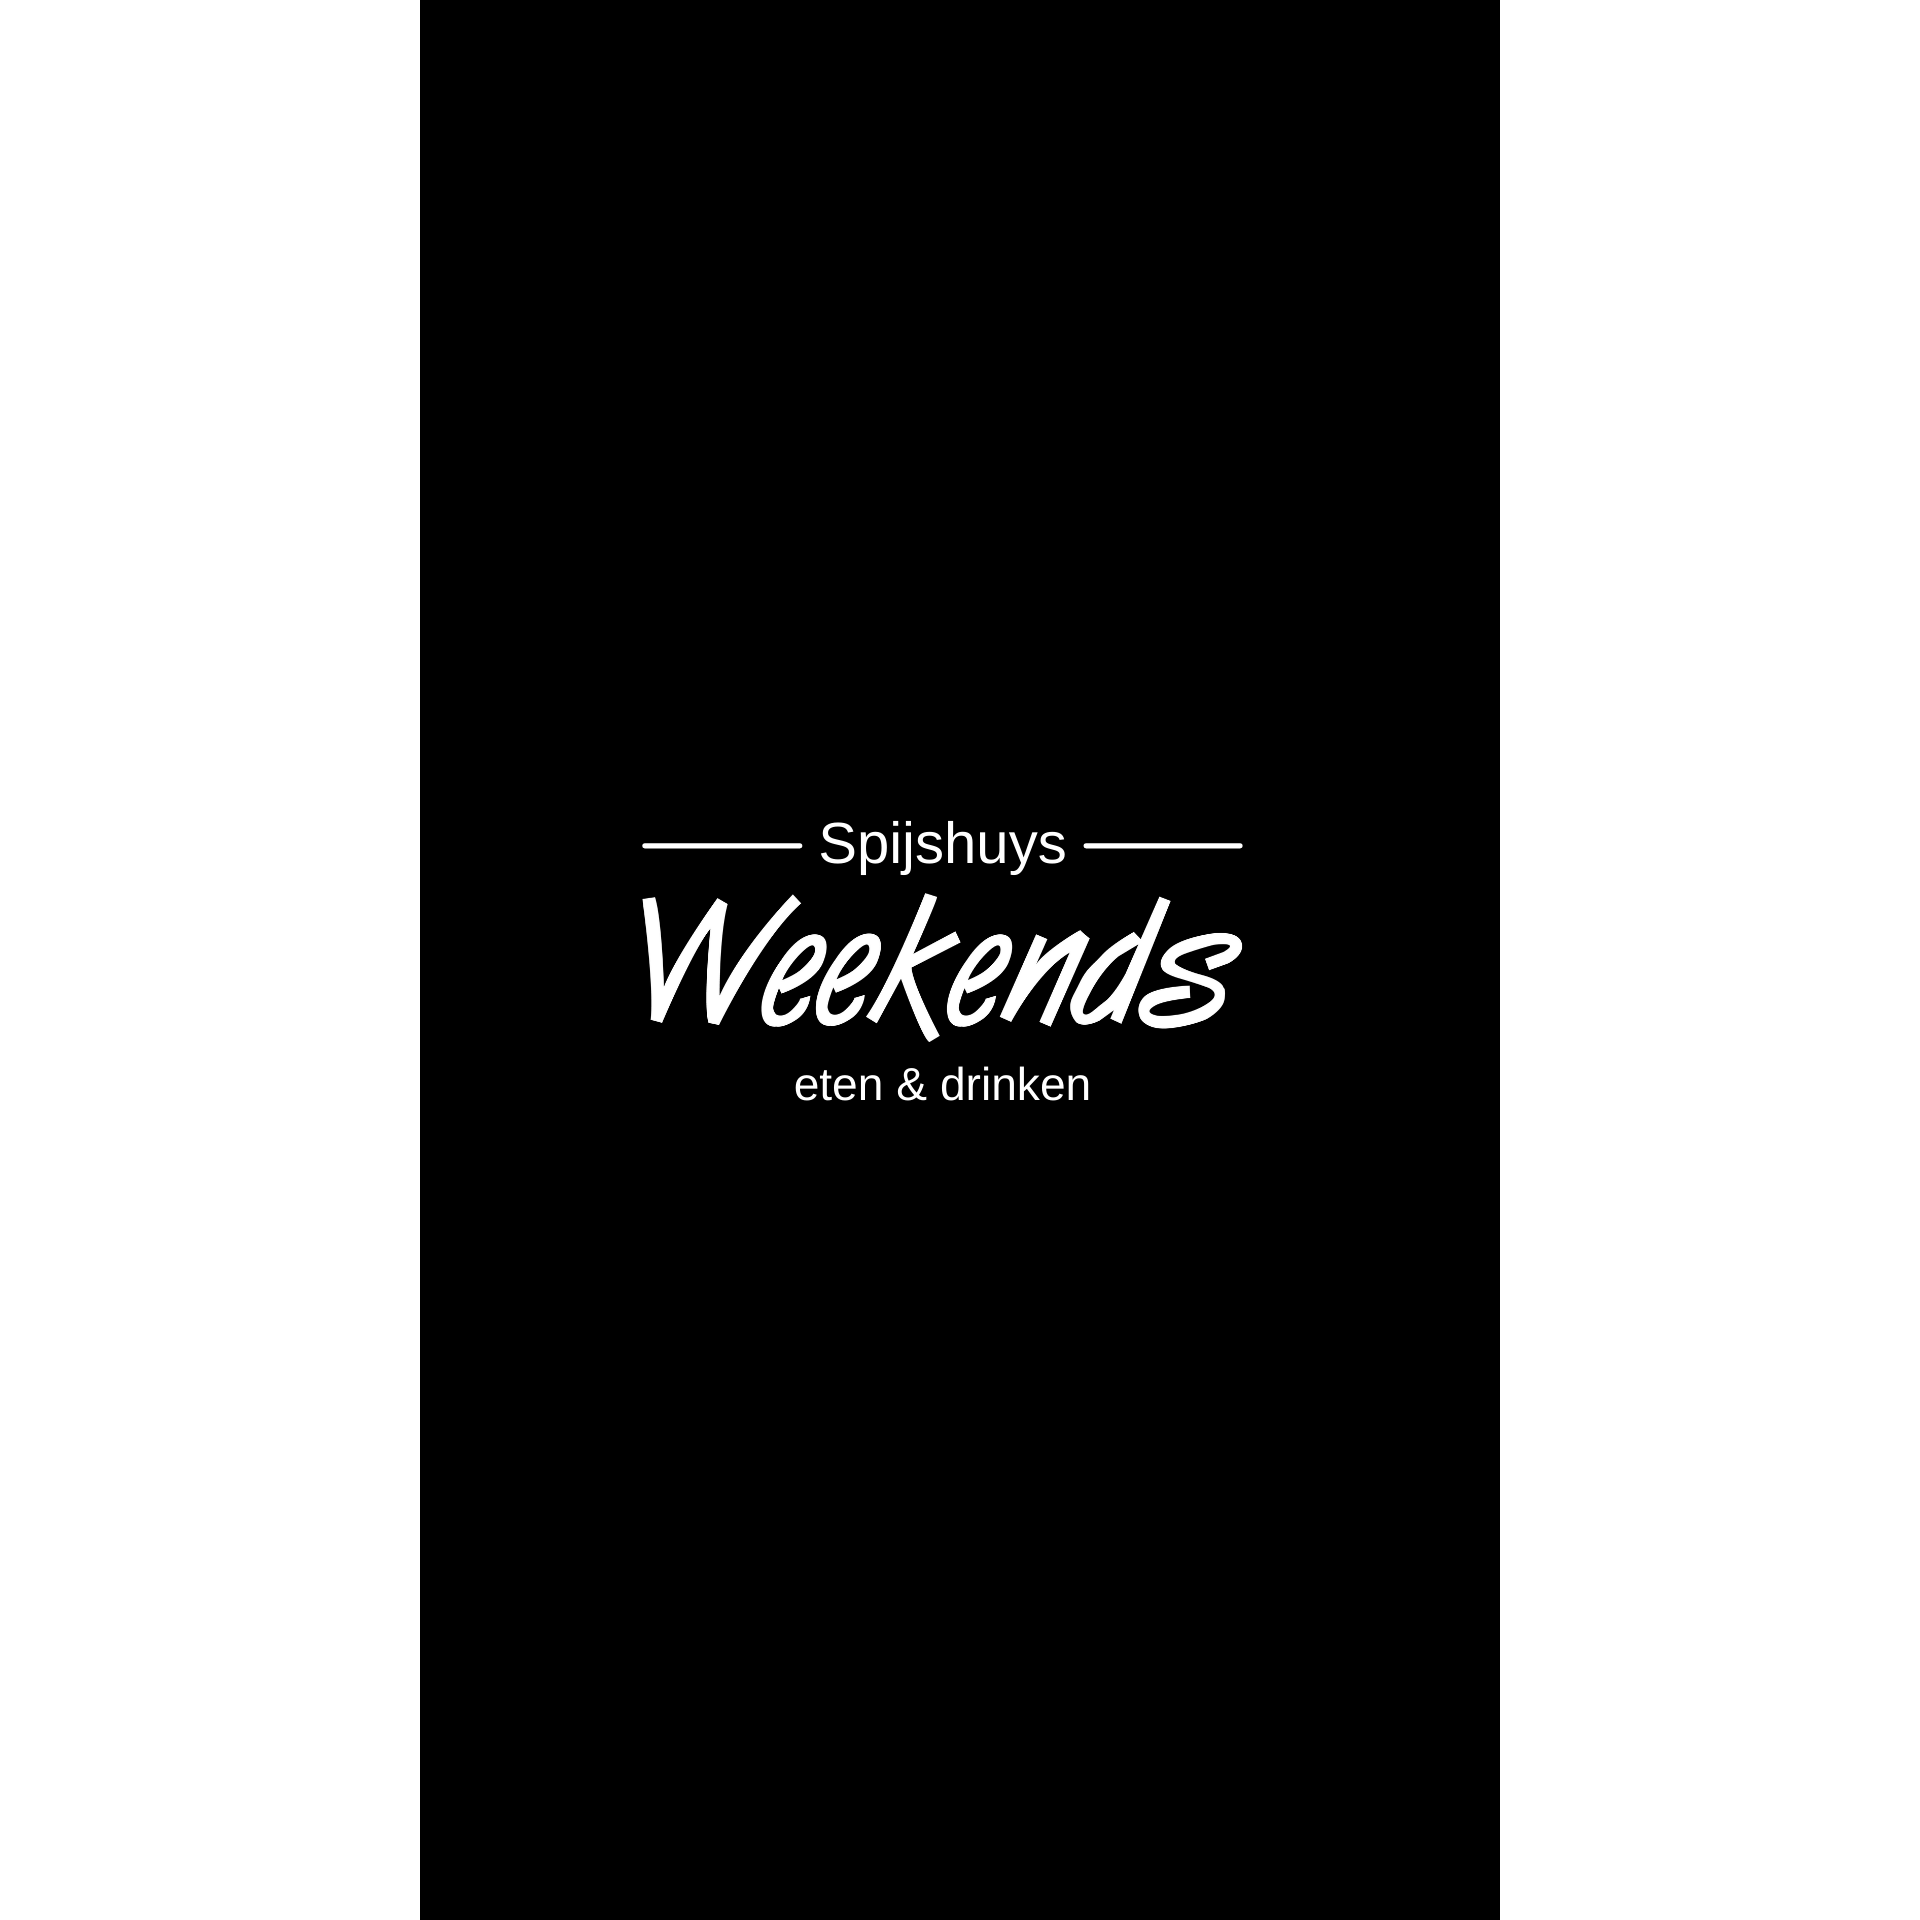 Restaurant Weekends Logo